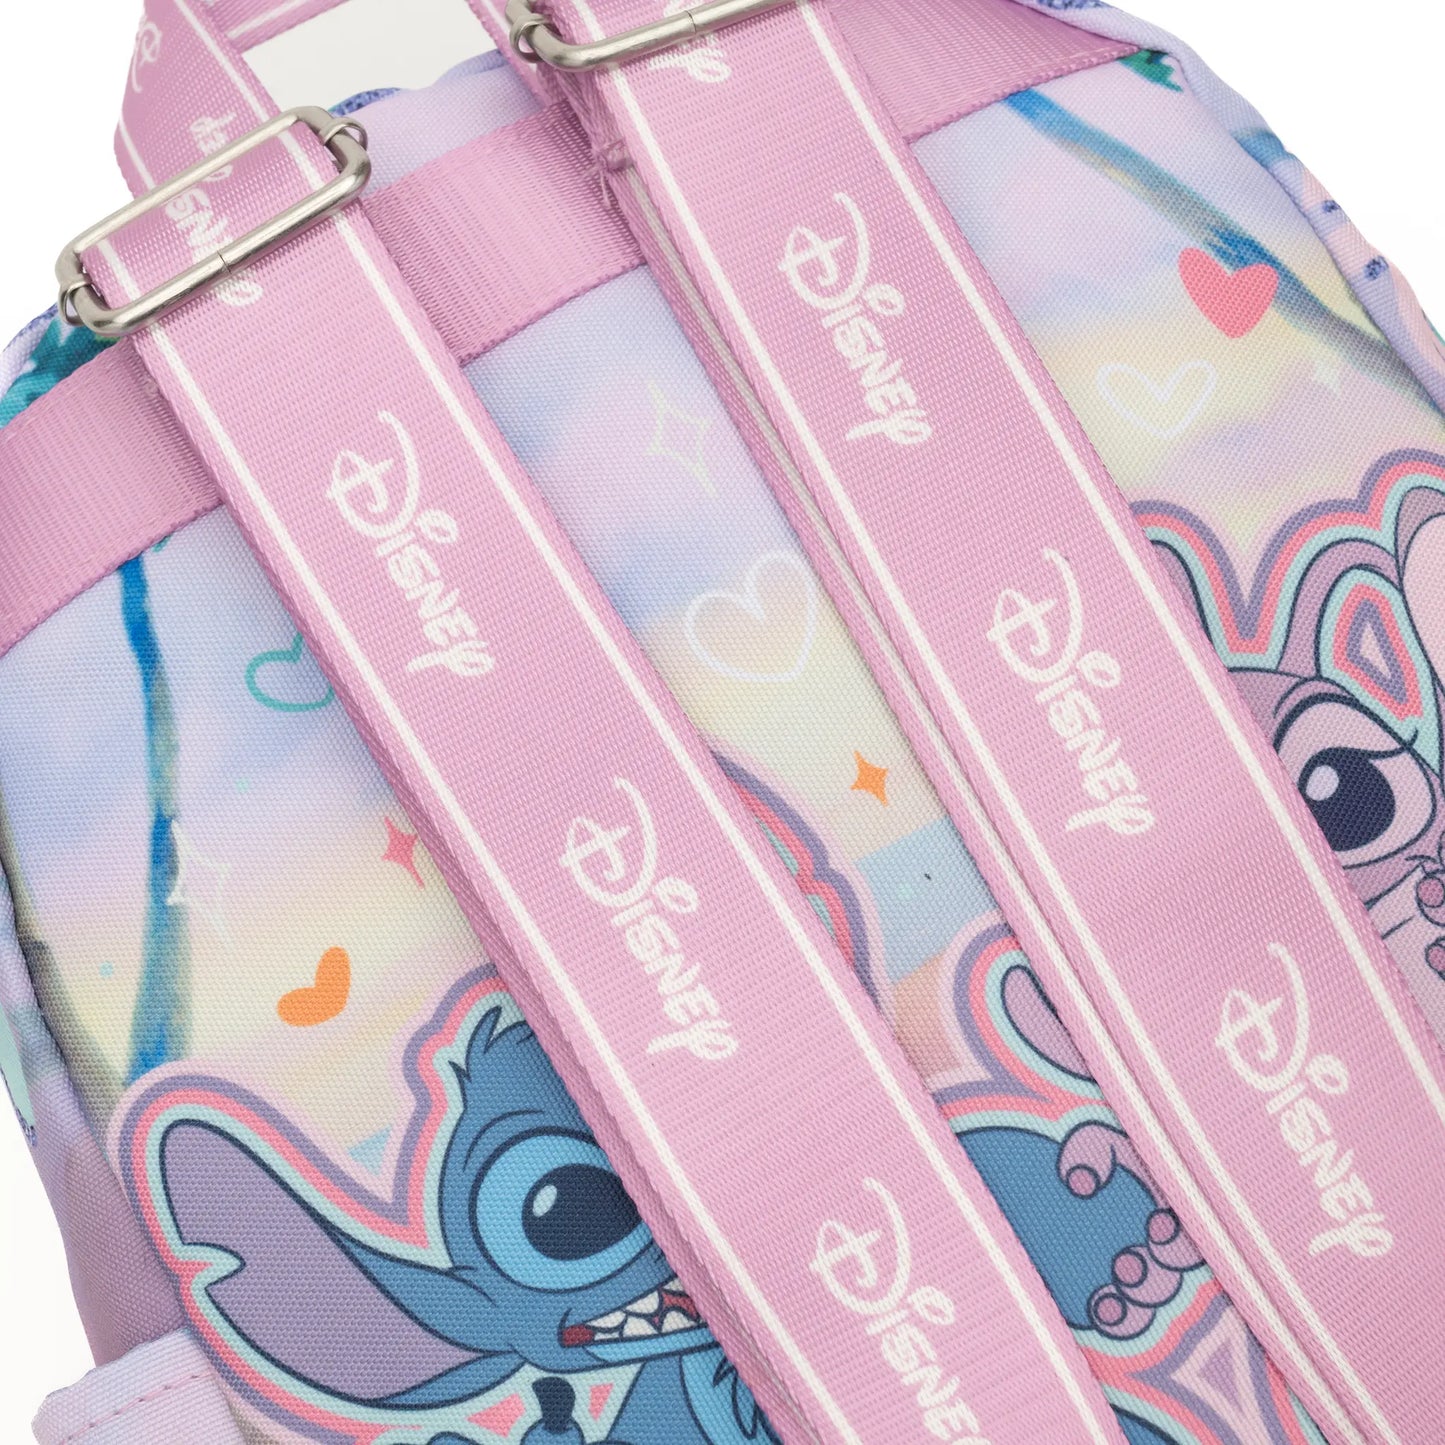 
                  
                    Disney Lilo and Stitch - Angel 13-inch Nylon Backpack
                  
                